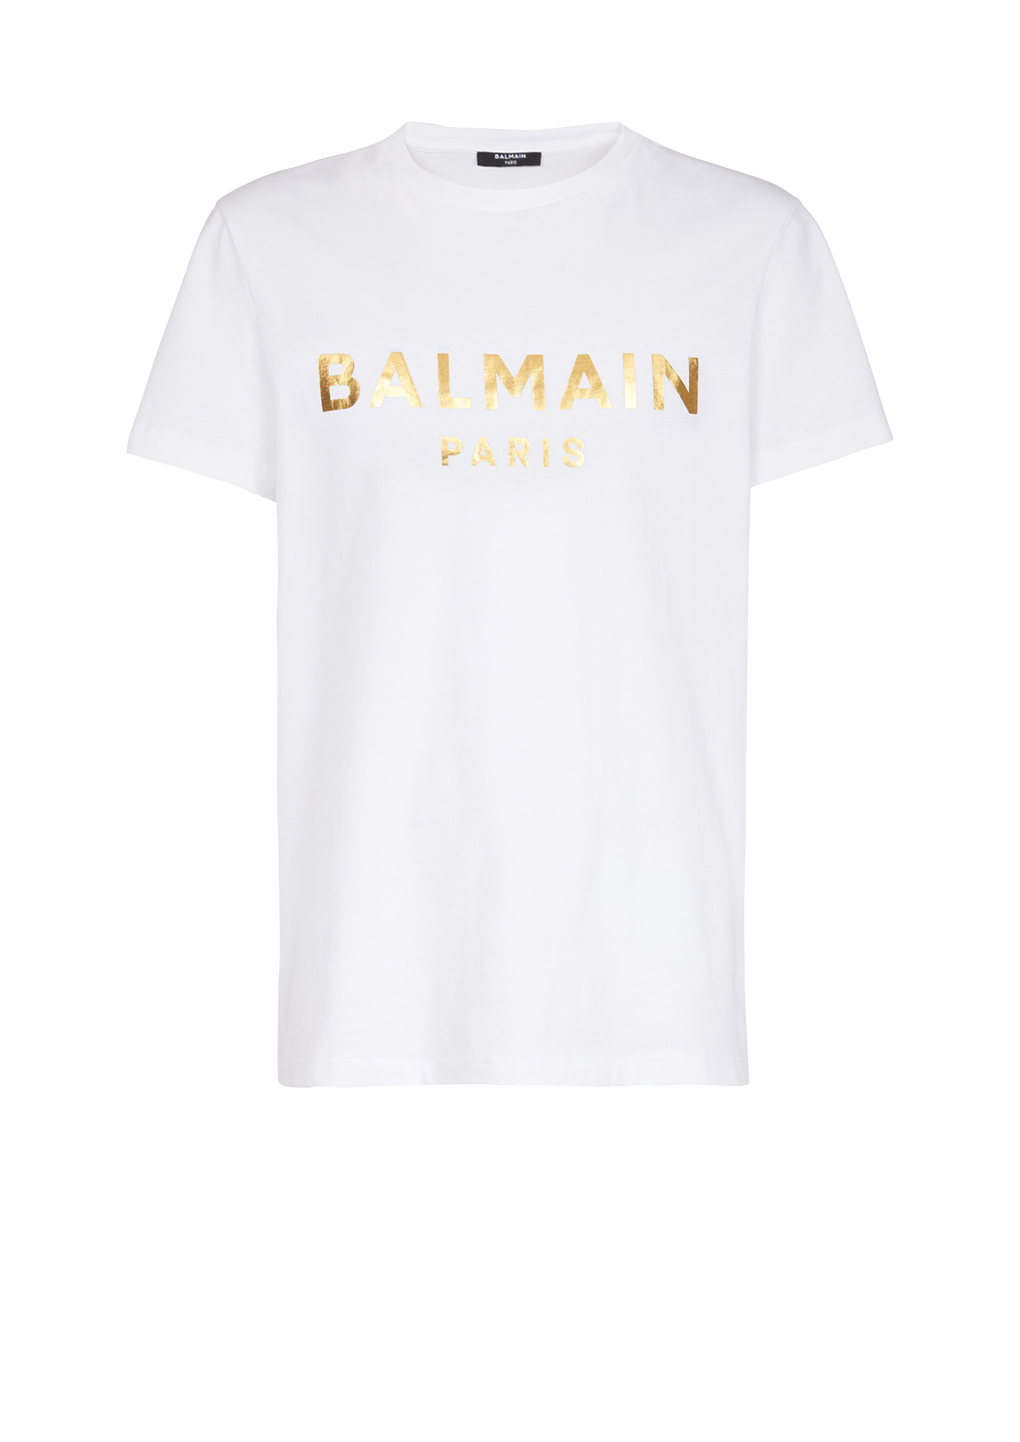 T-shirt en coton imprimé logo Balmain Paris, blanc, hi-res